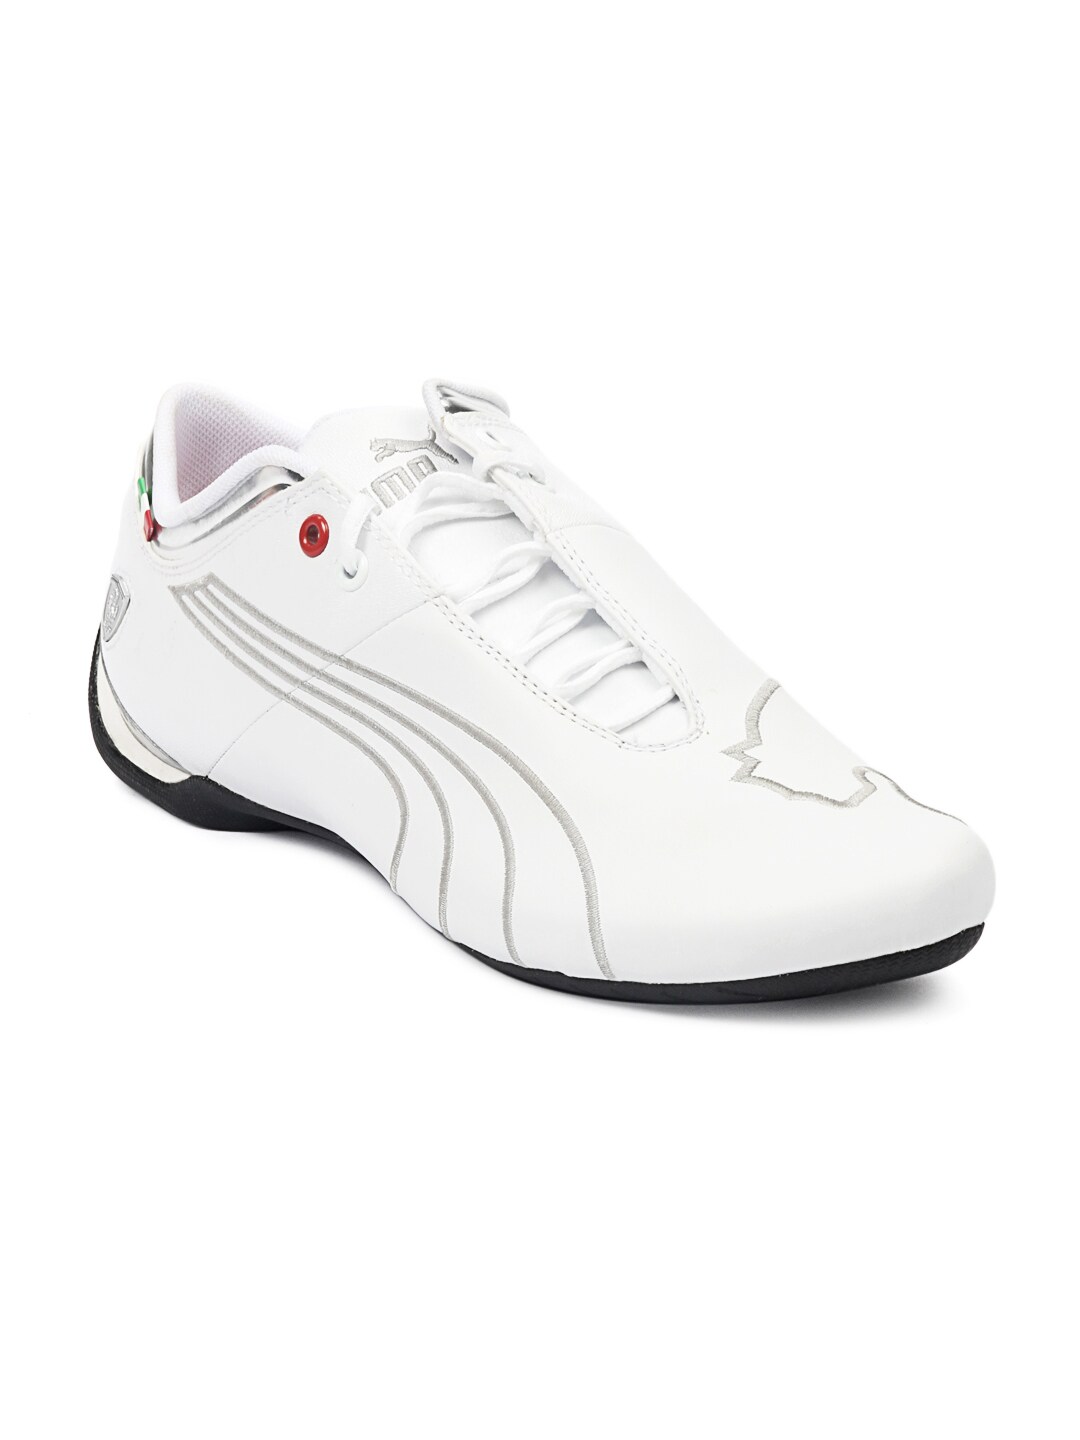 Puma Men White Future Cat Shoes